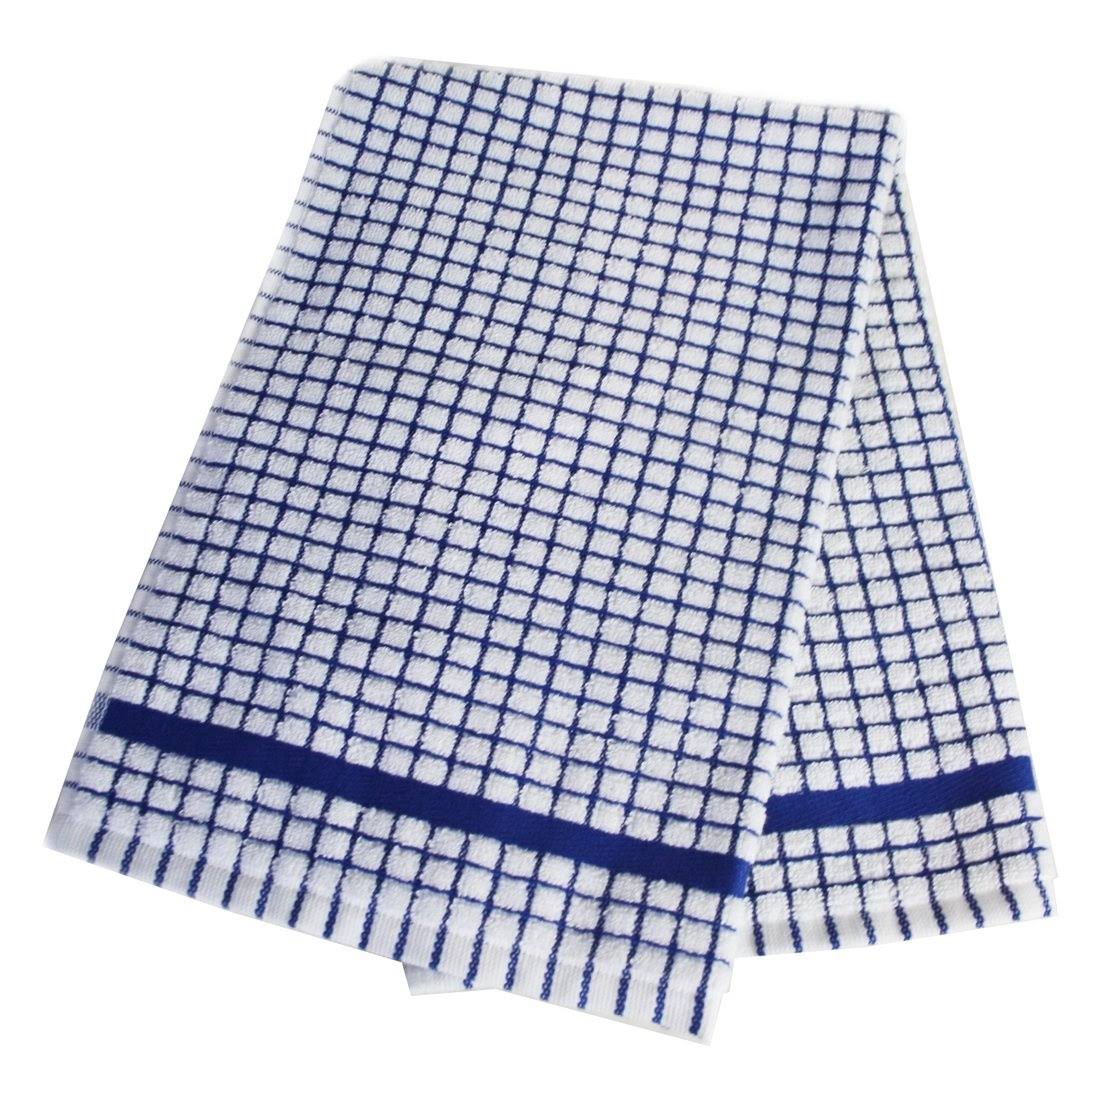 Lamont Poli Dri Premium Quality Kitchen Tea Towels - Blue